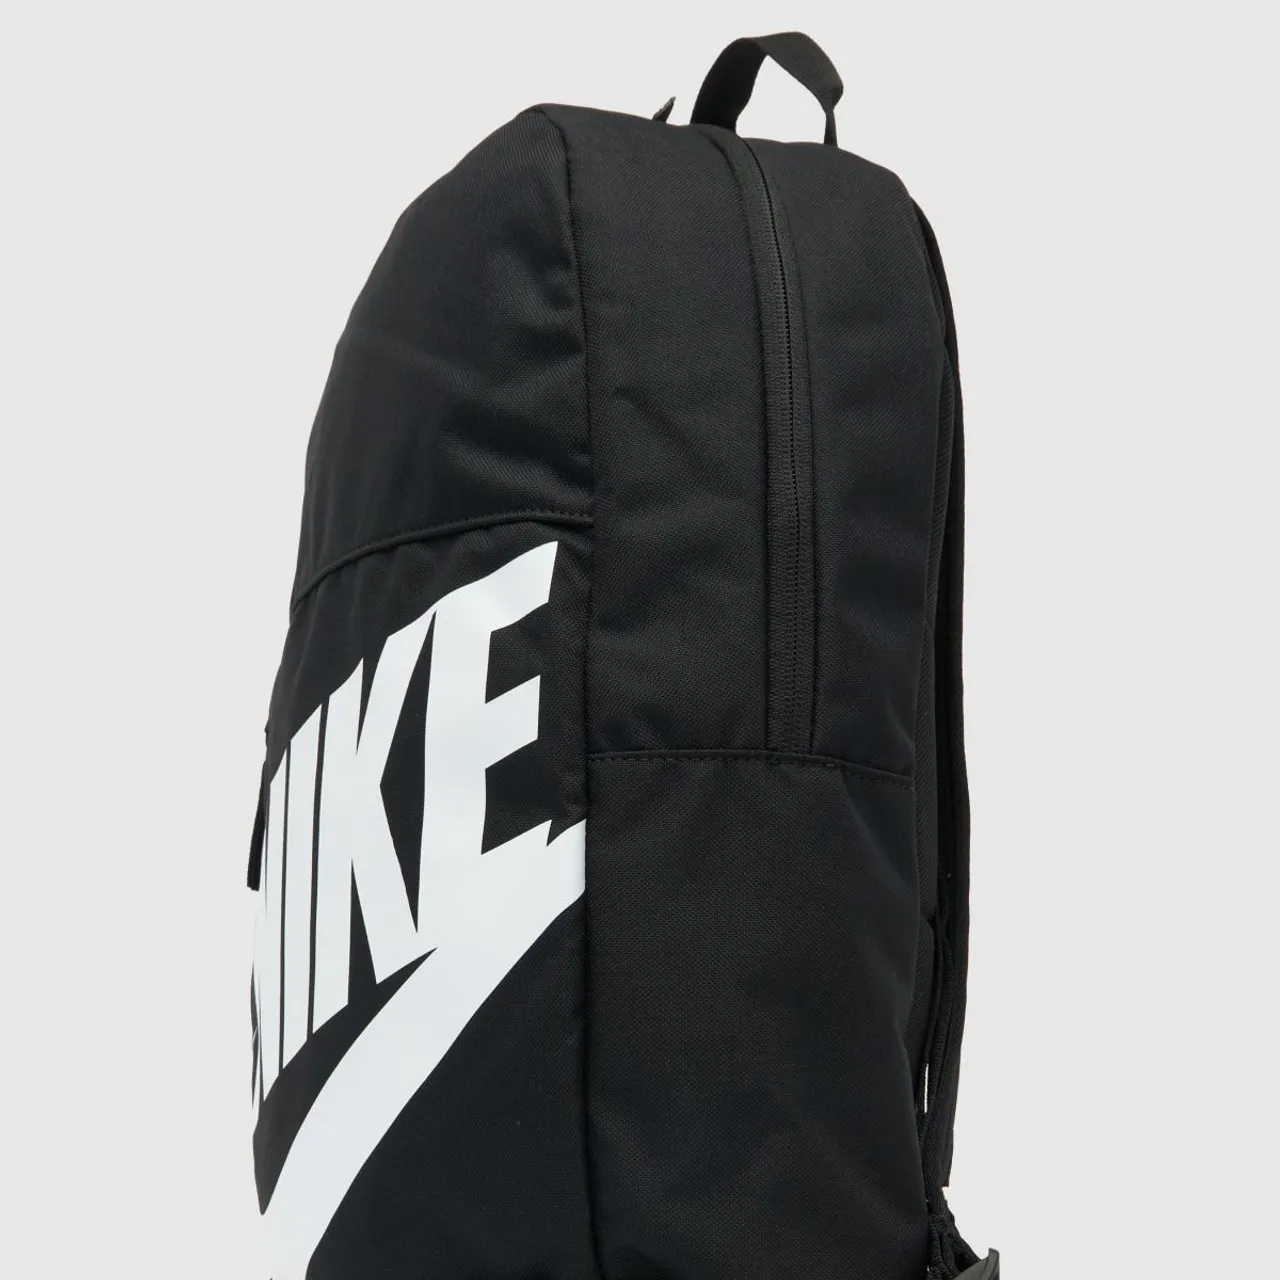 Nike Black & White Kids Elemental Backpack, Size: One Size